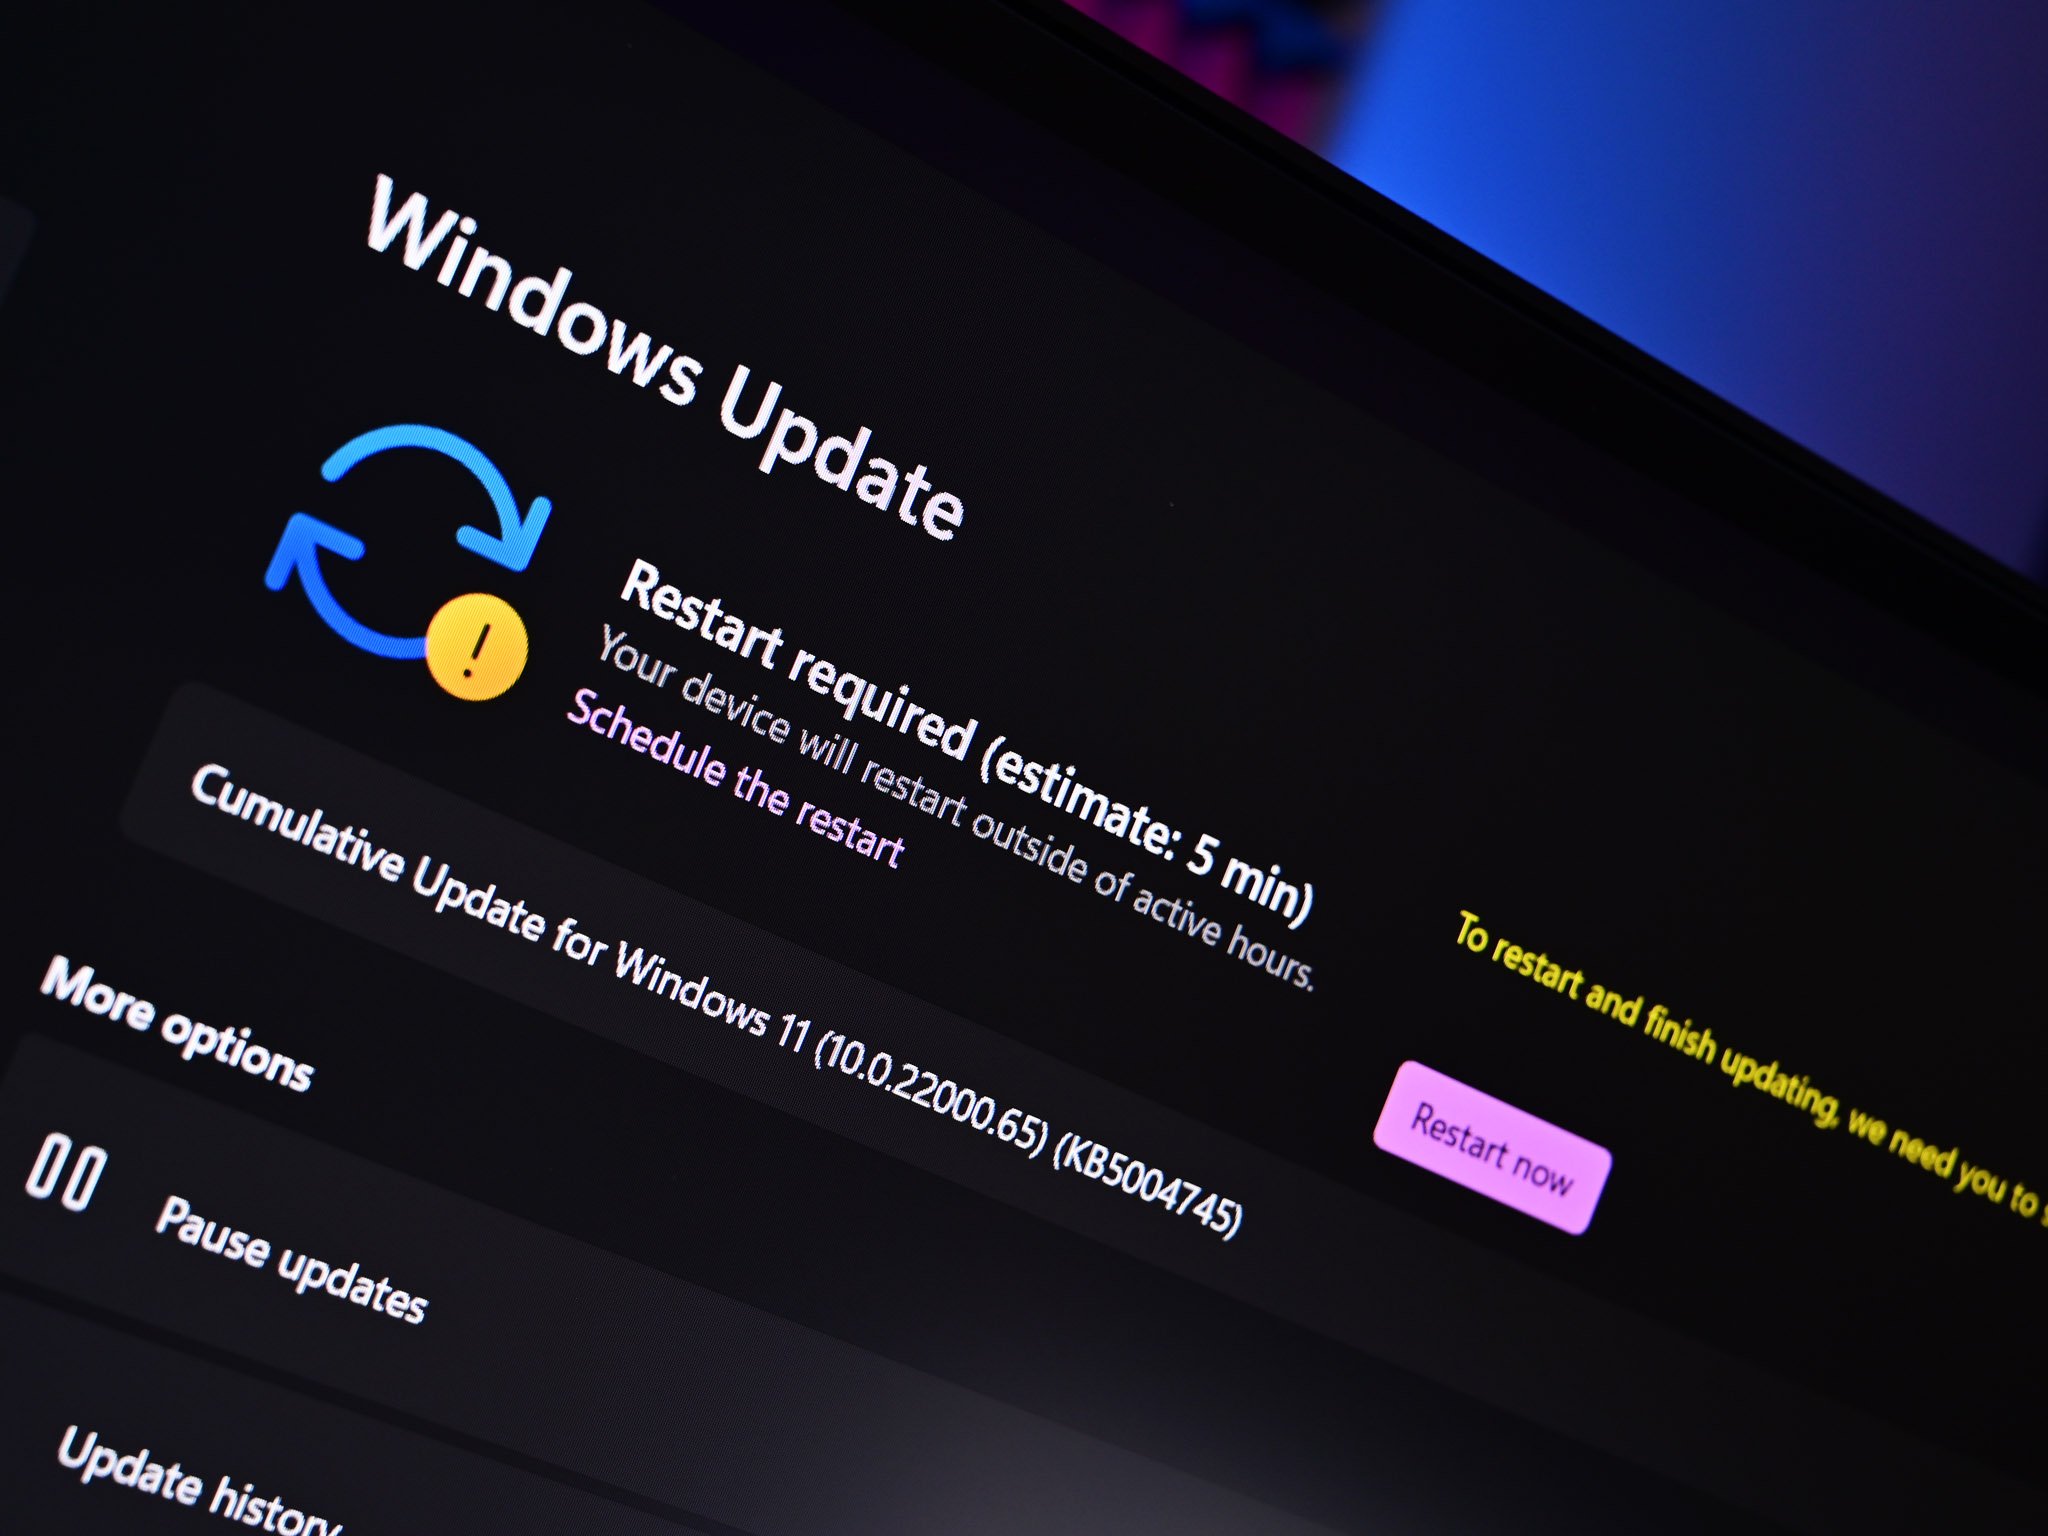 Voice access improvements arrive with Windows 11 preview build 22538 - Windows Central